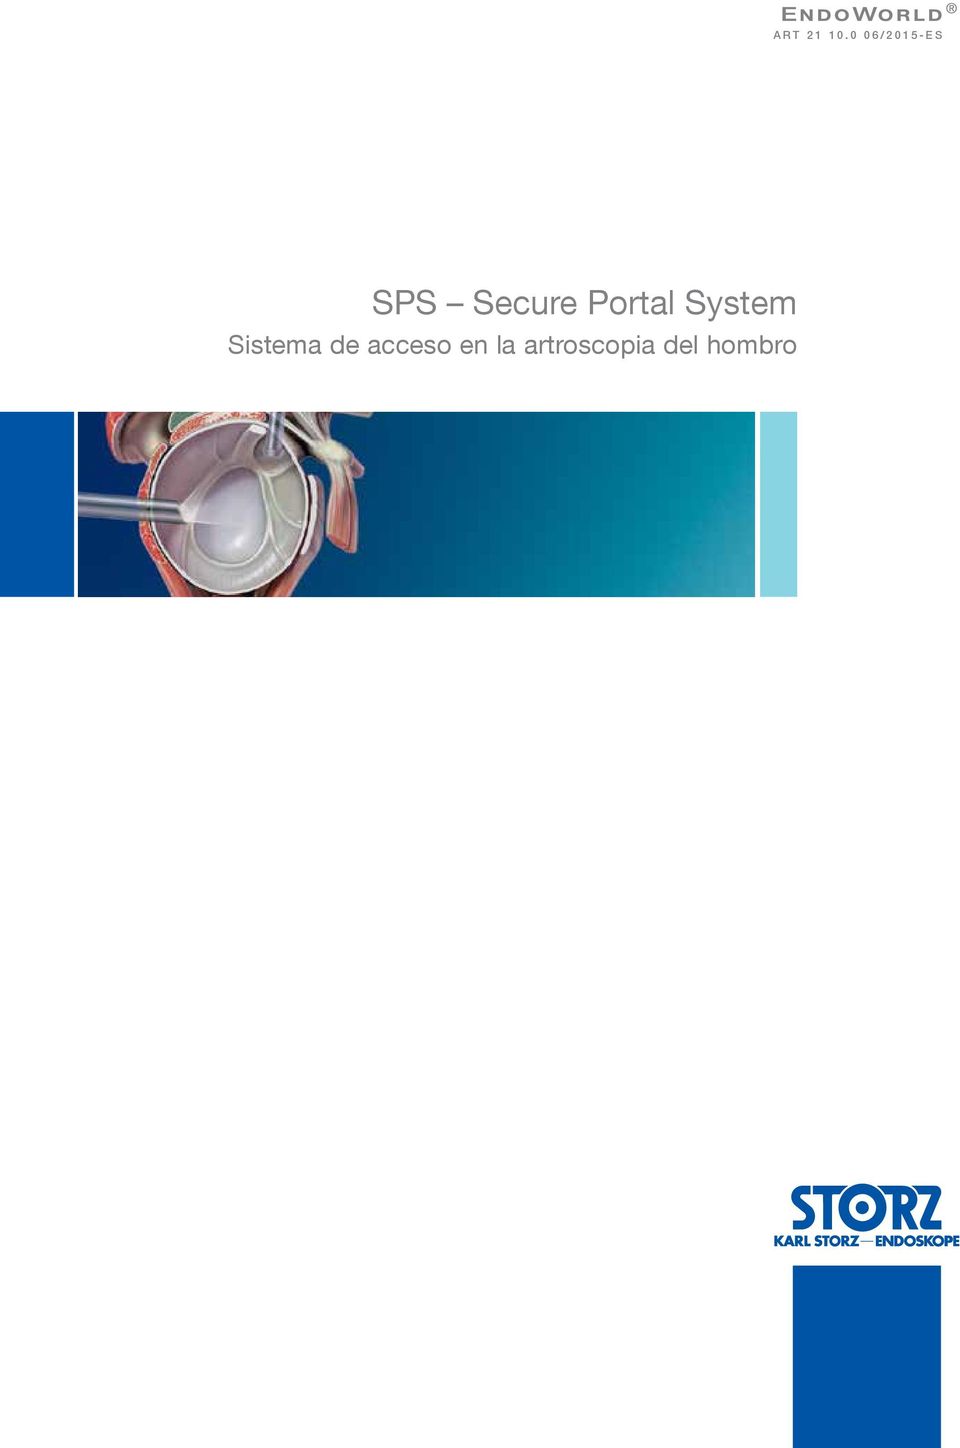 Portal System Sistema